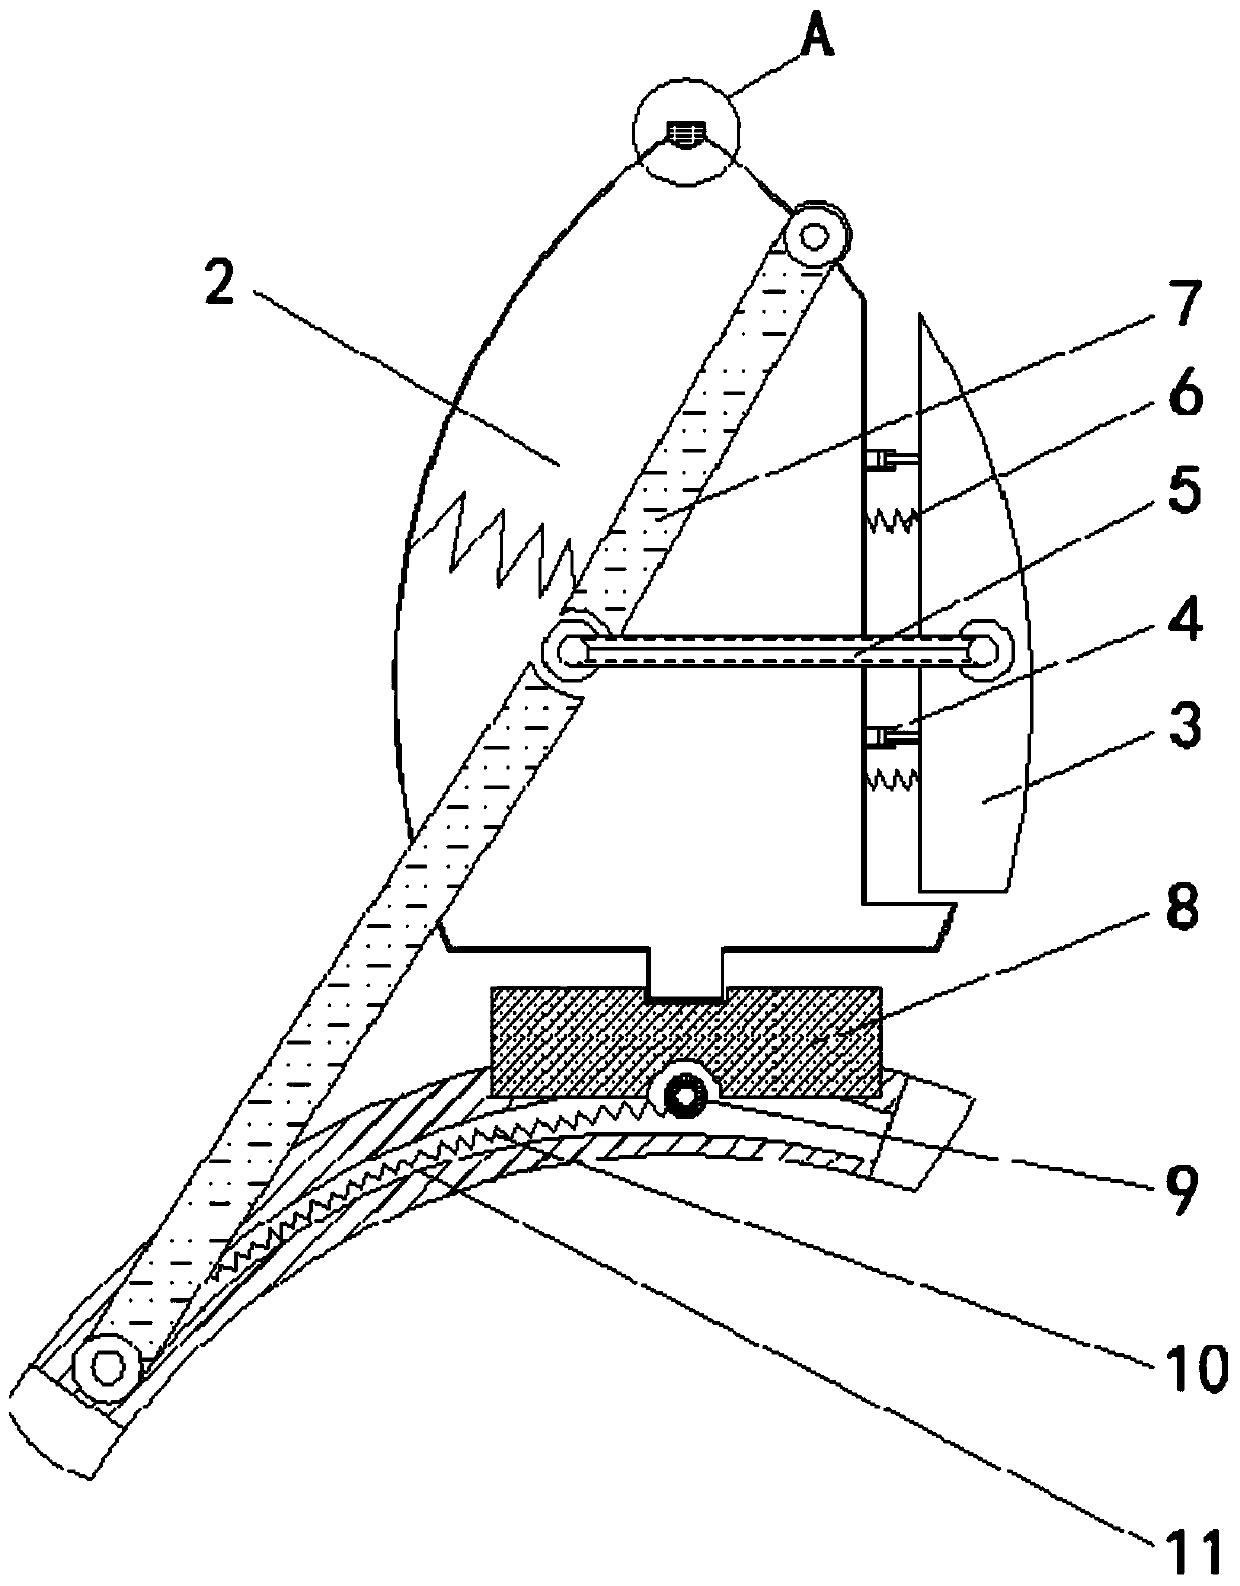 Garden mower for preventing blade from curling